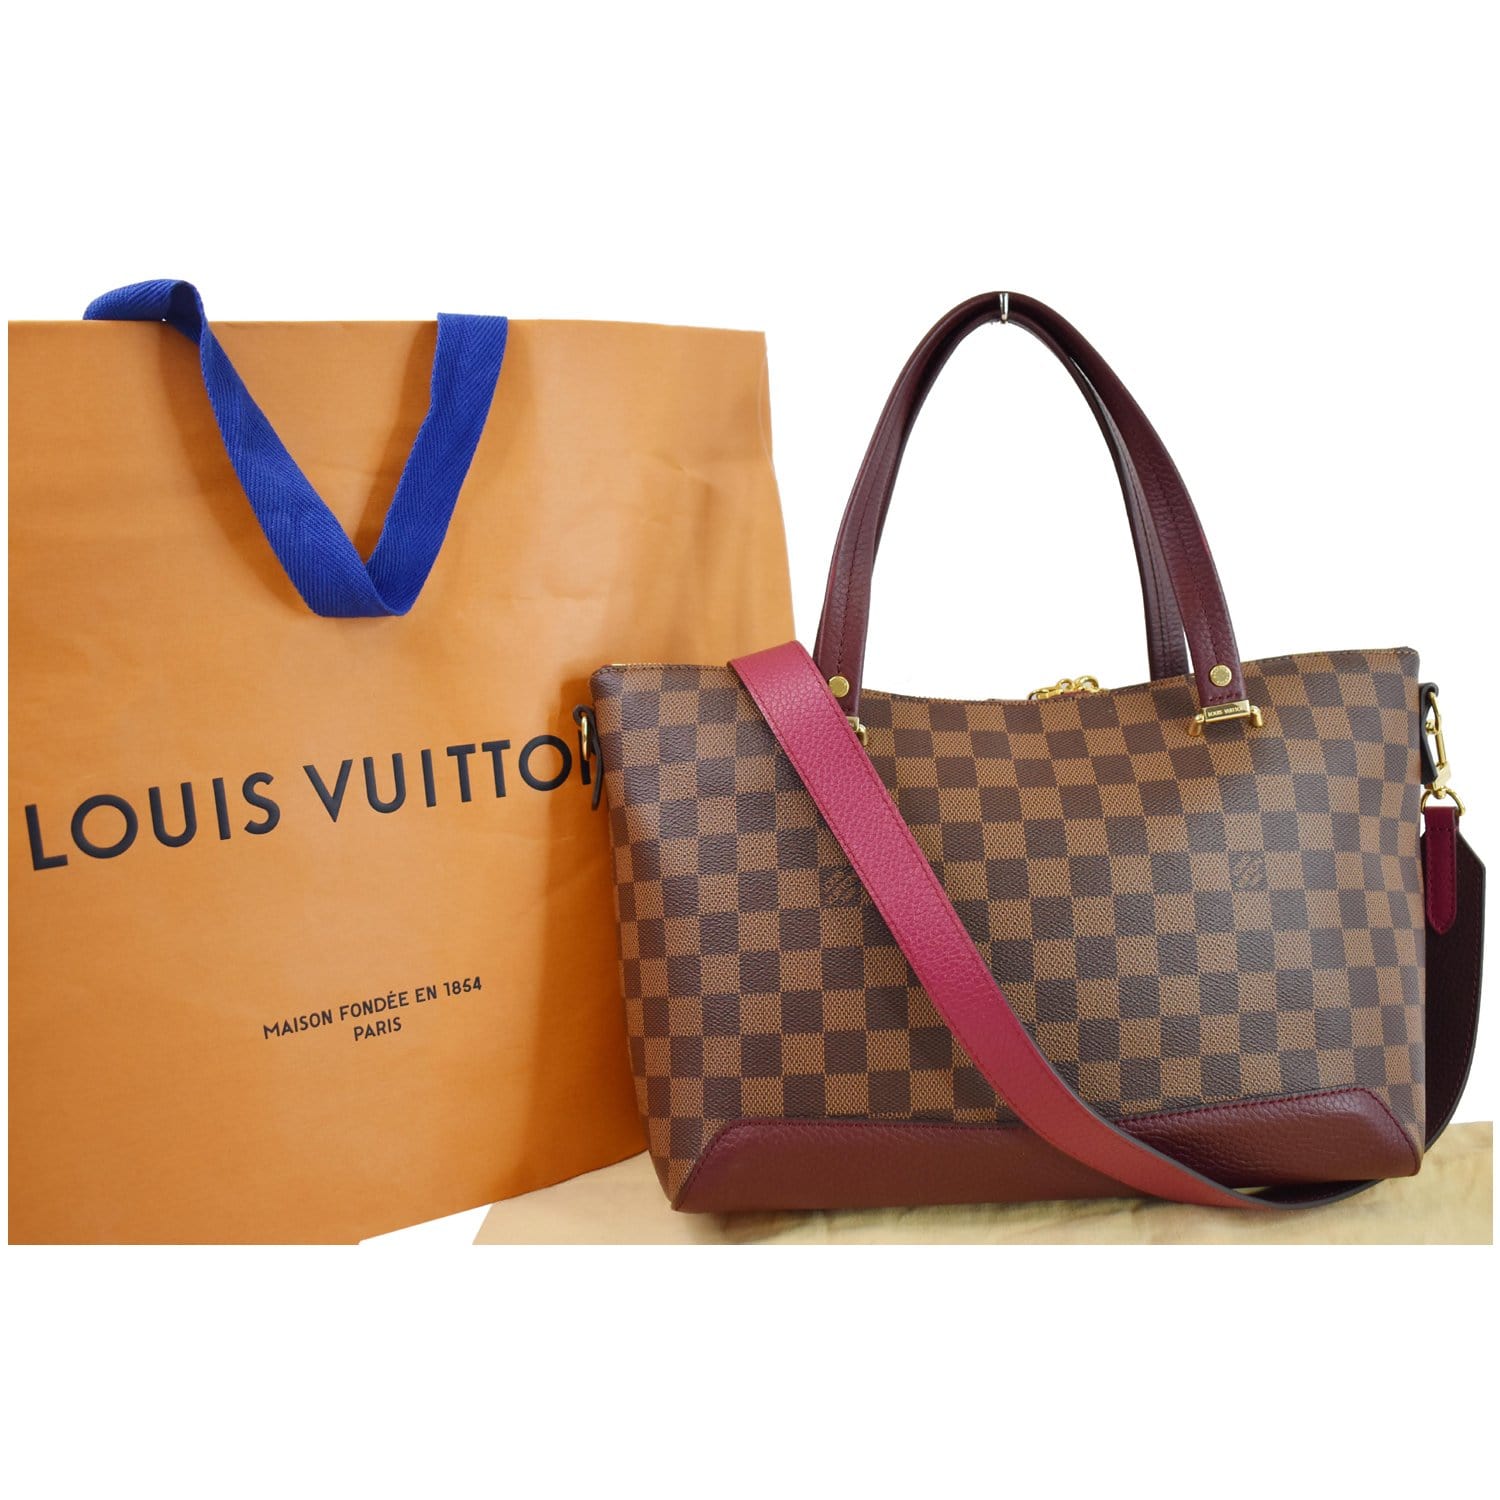 Louis Vuitton Damier Ebene Hyde Park Tote - Totes, Handbags